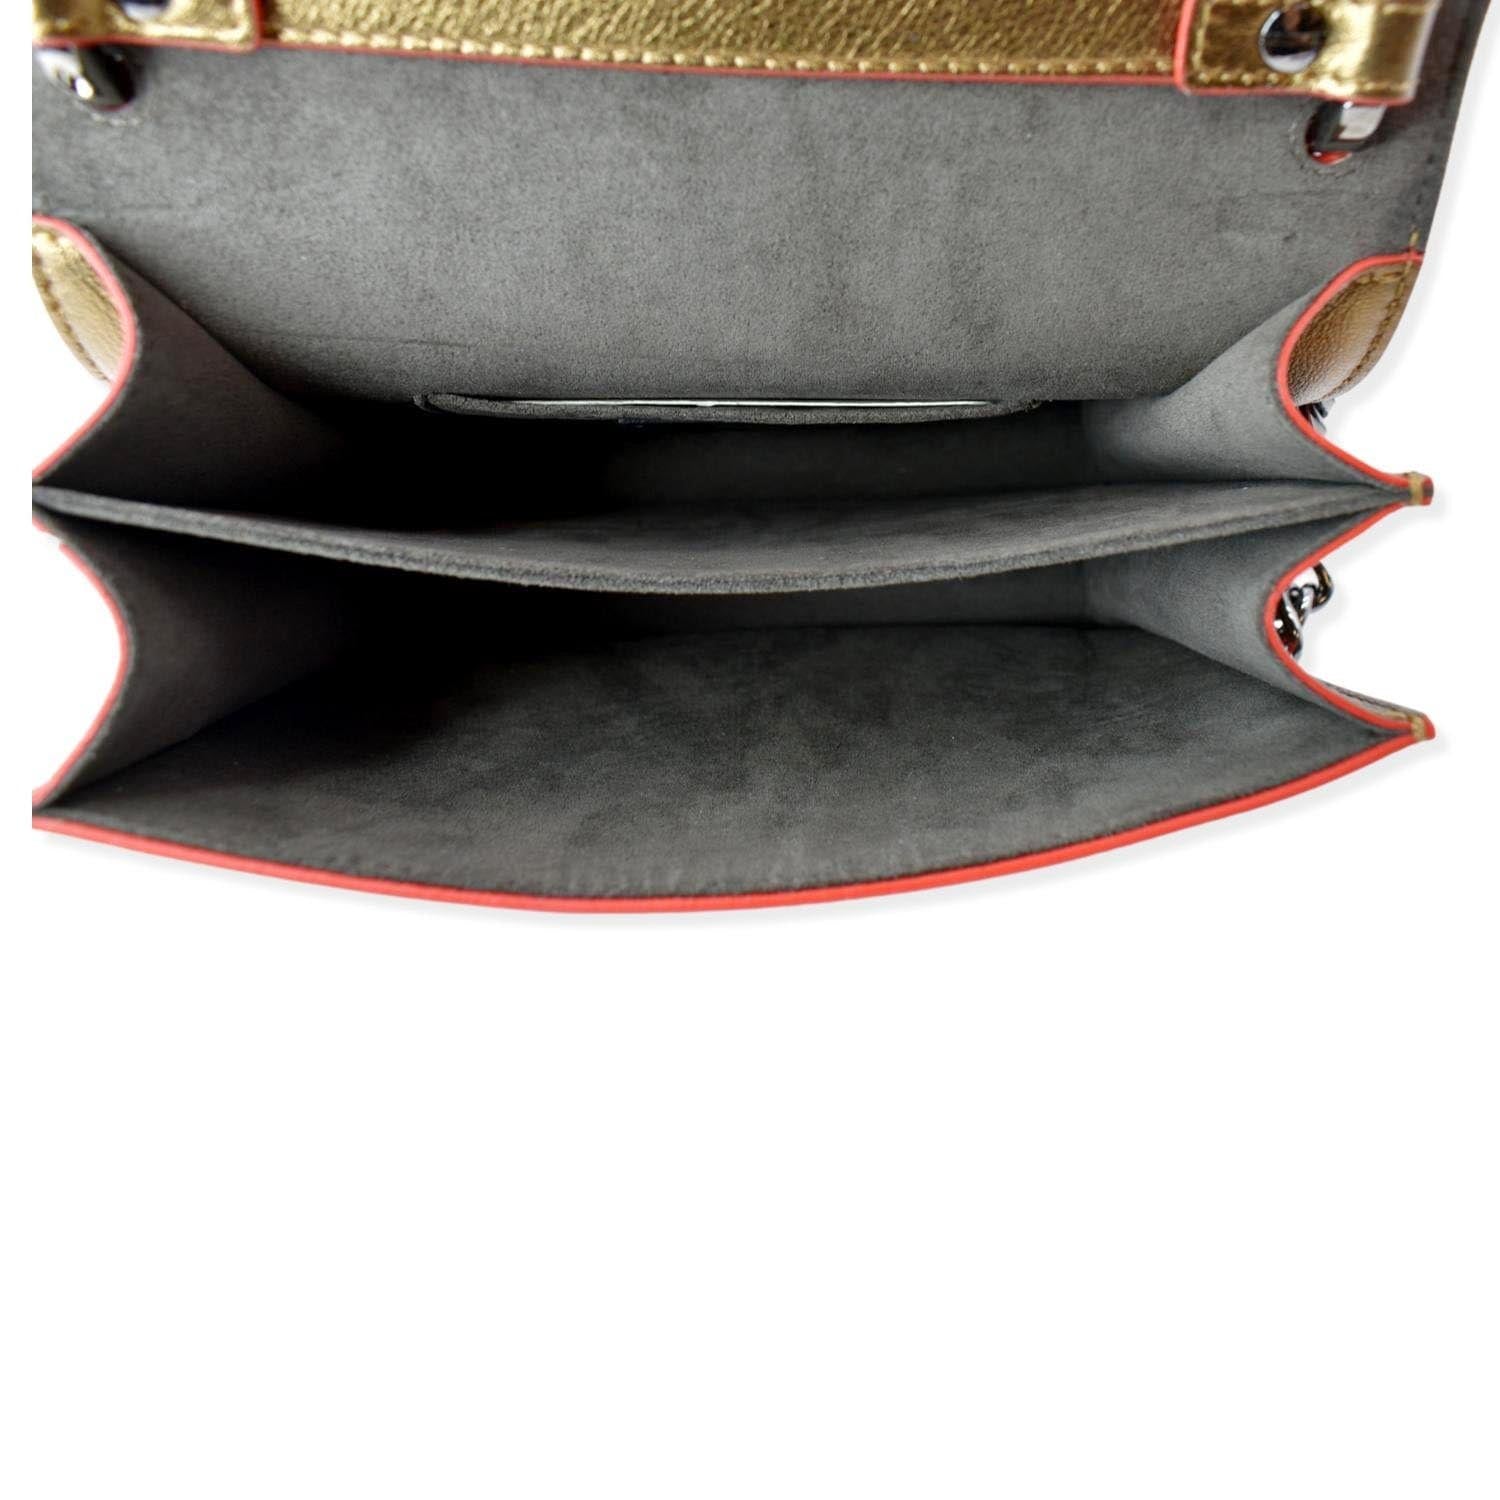 FENDI triplet studs clutch bag pouch calfskin leather black gold